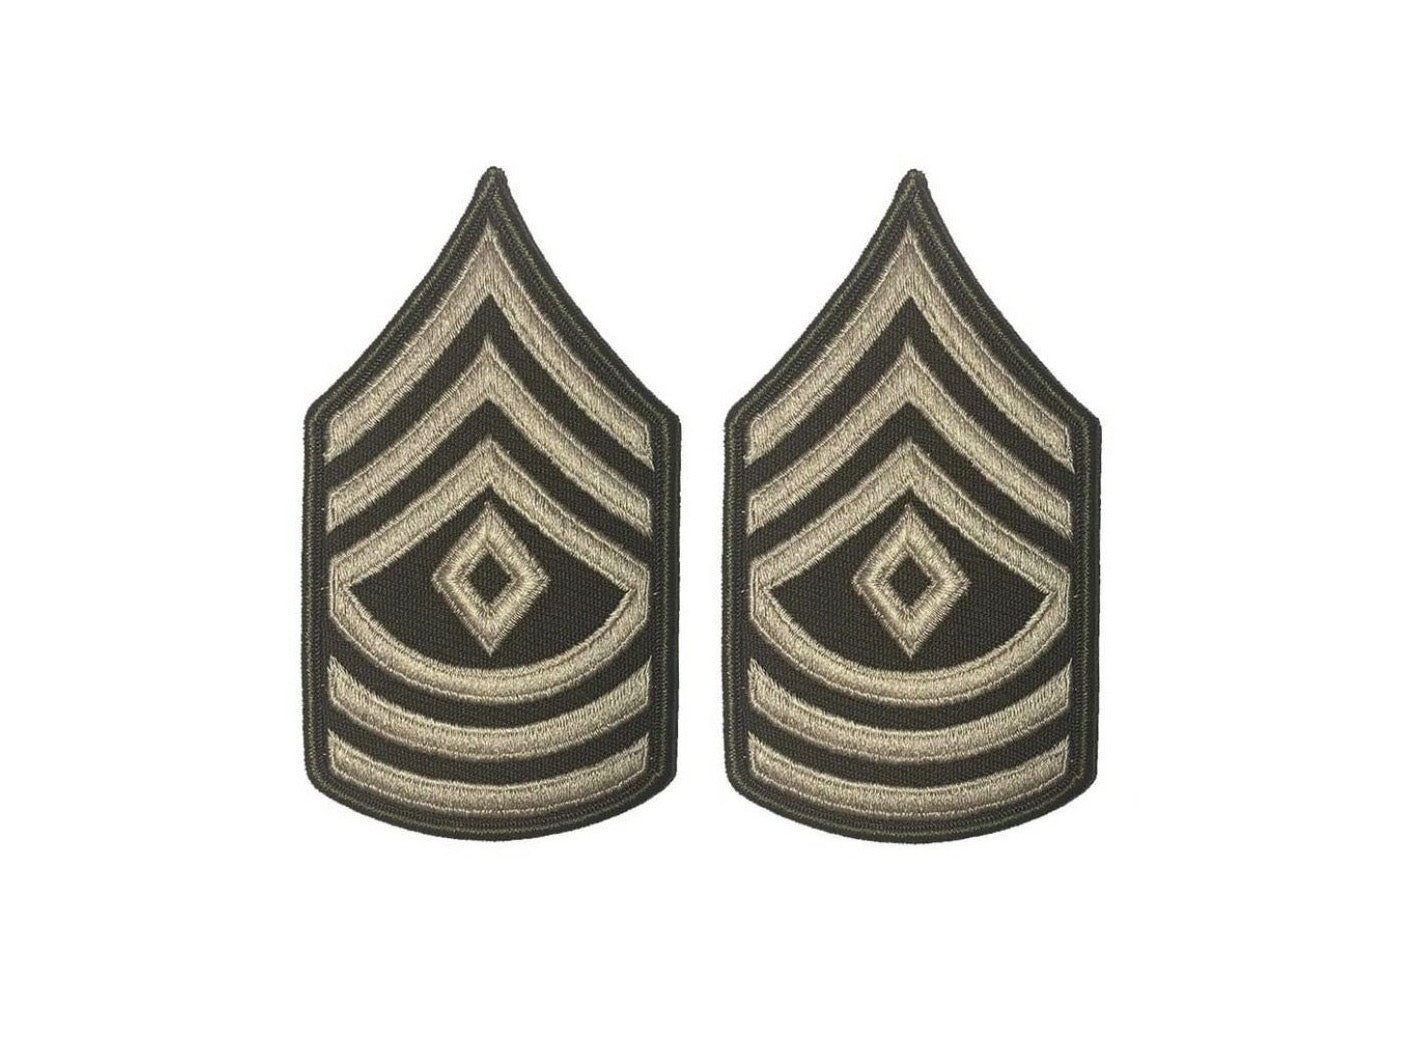 army first sergeant insignia